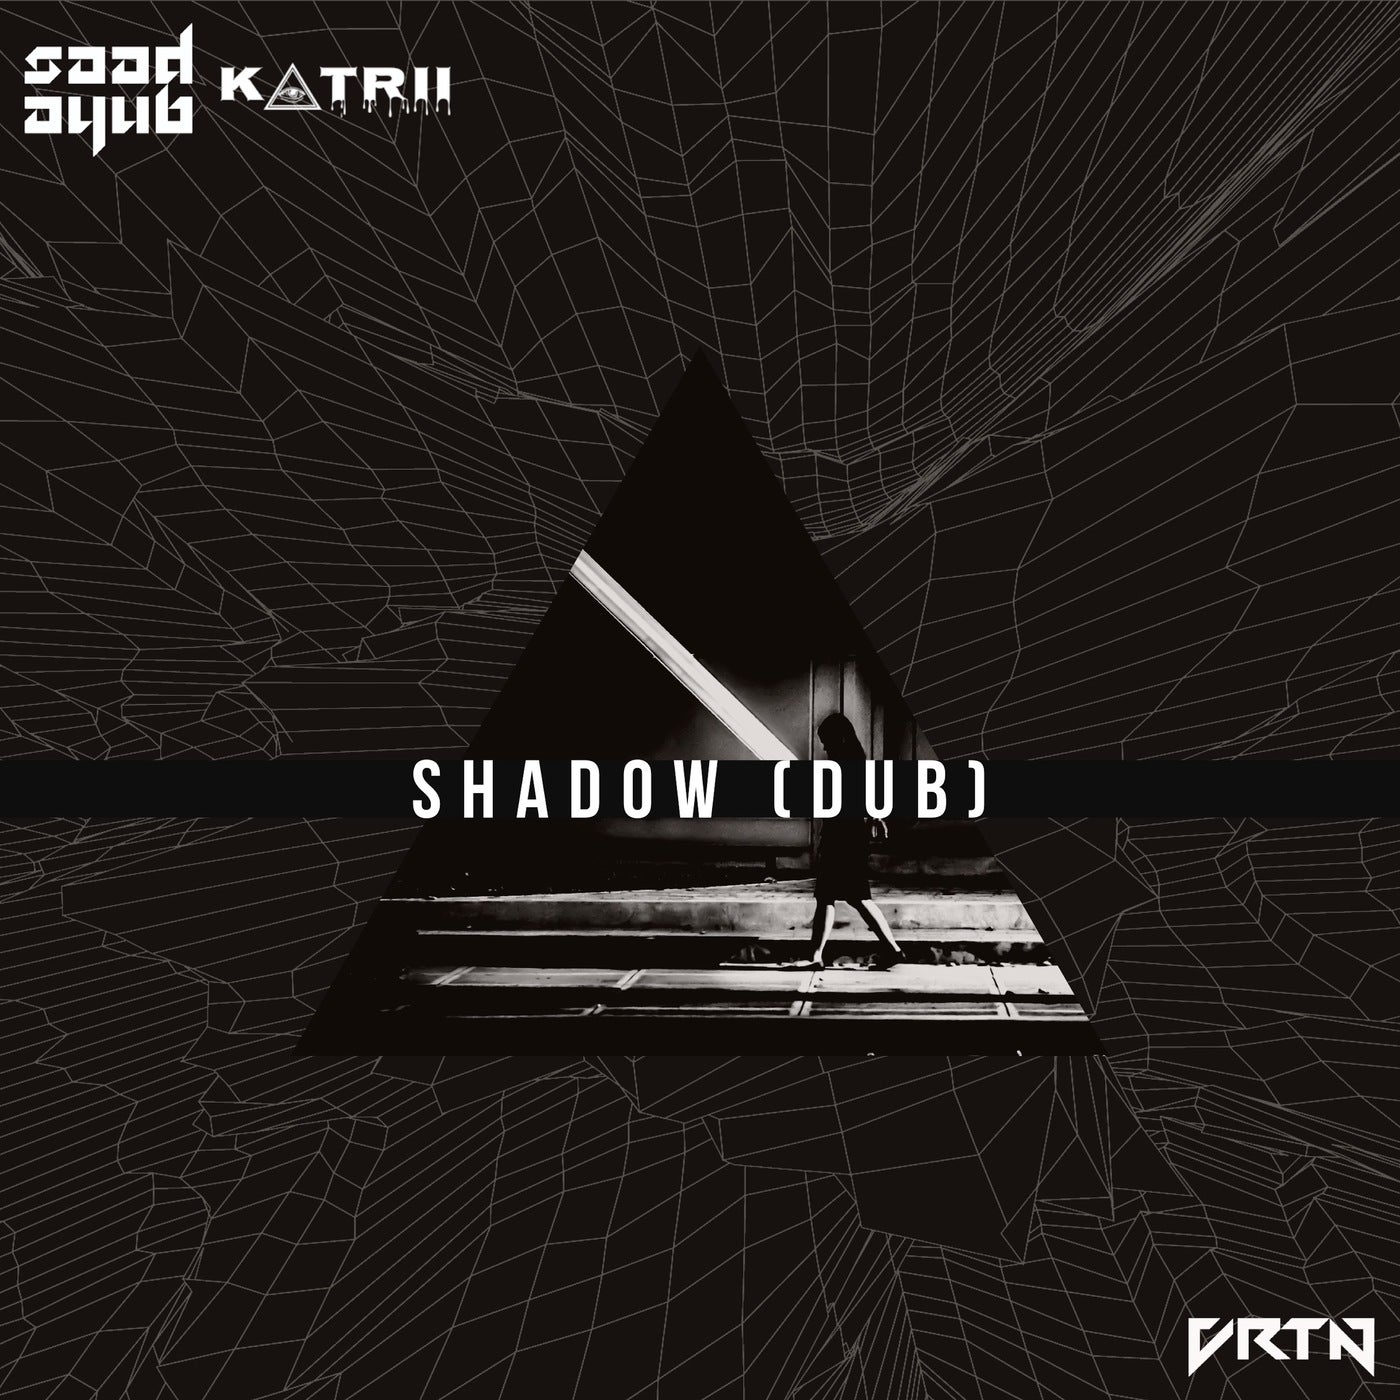 Saad Ayub & Katrii - Shadow (Dub Mix) [VRTNCDN4]